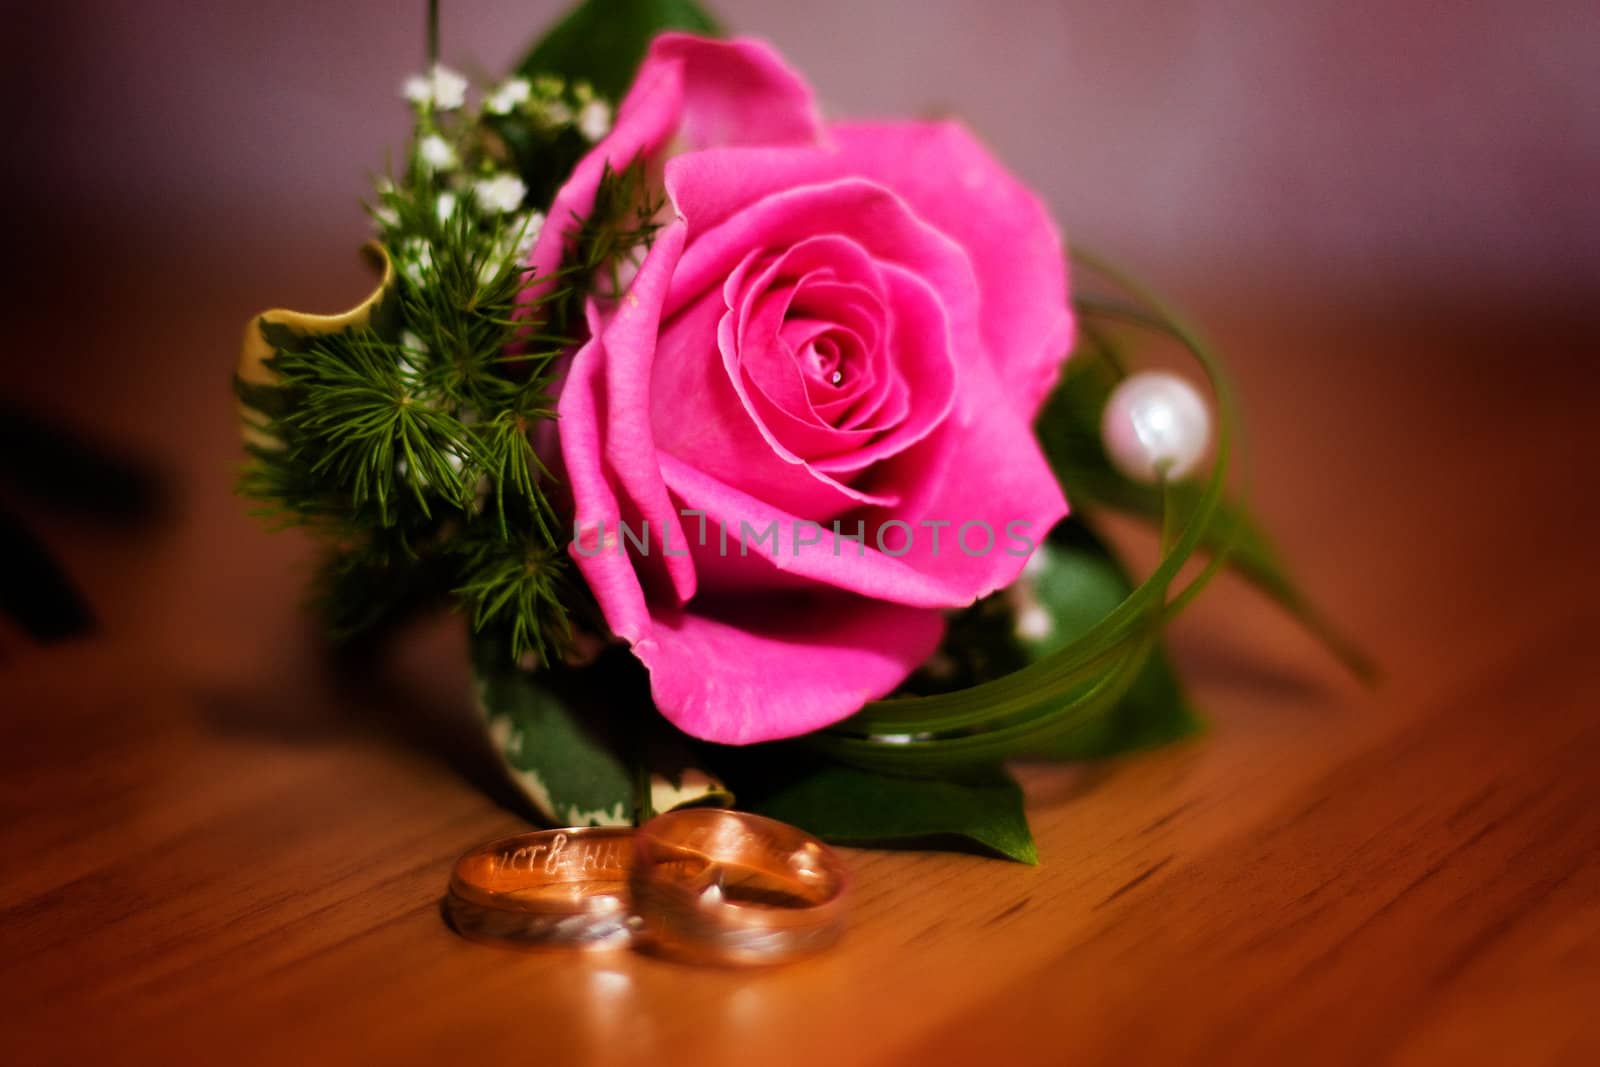 flower and wedding rings by grigorenko